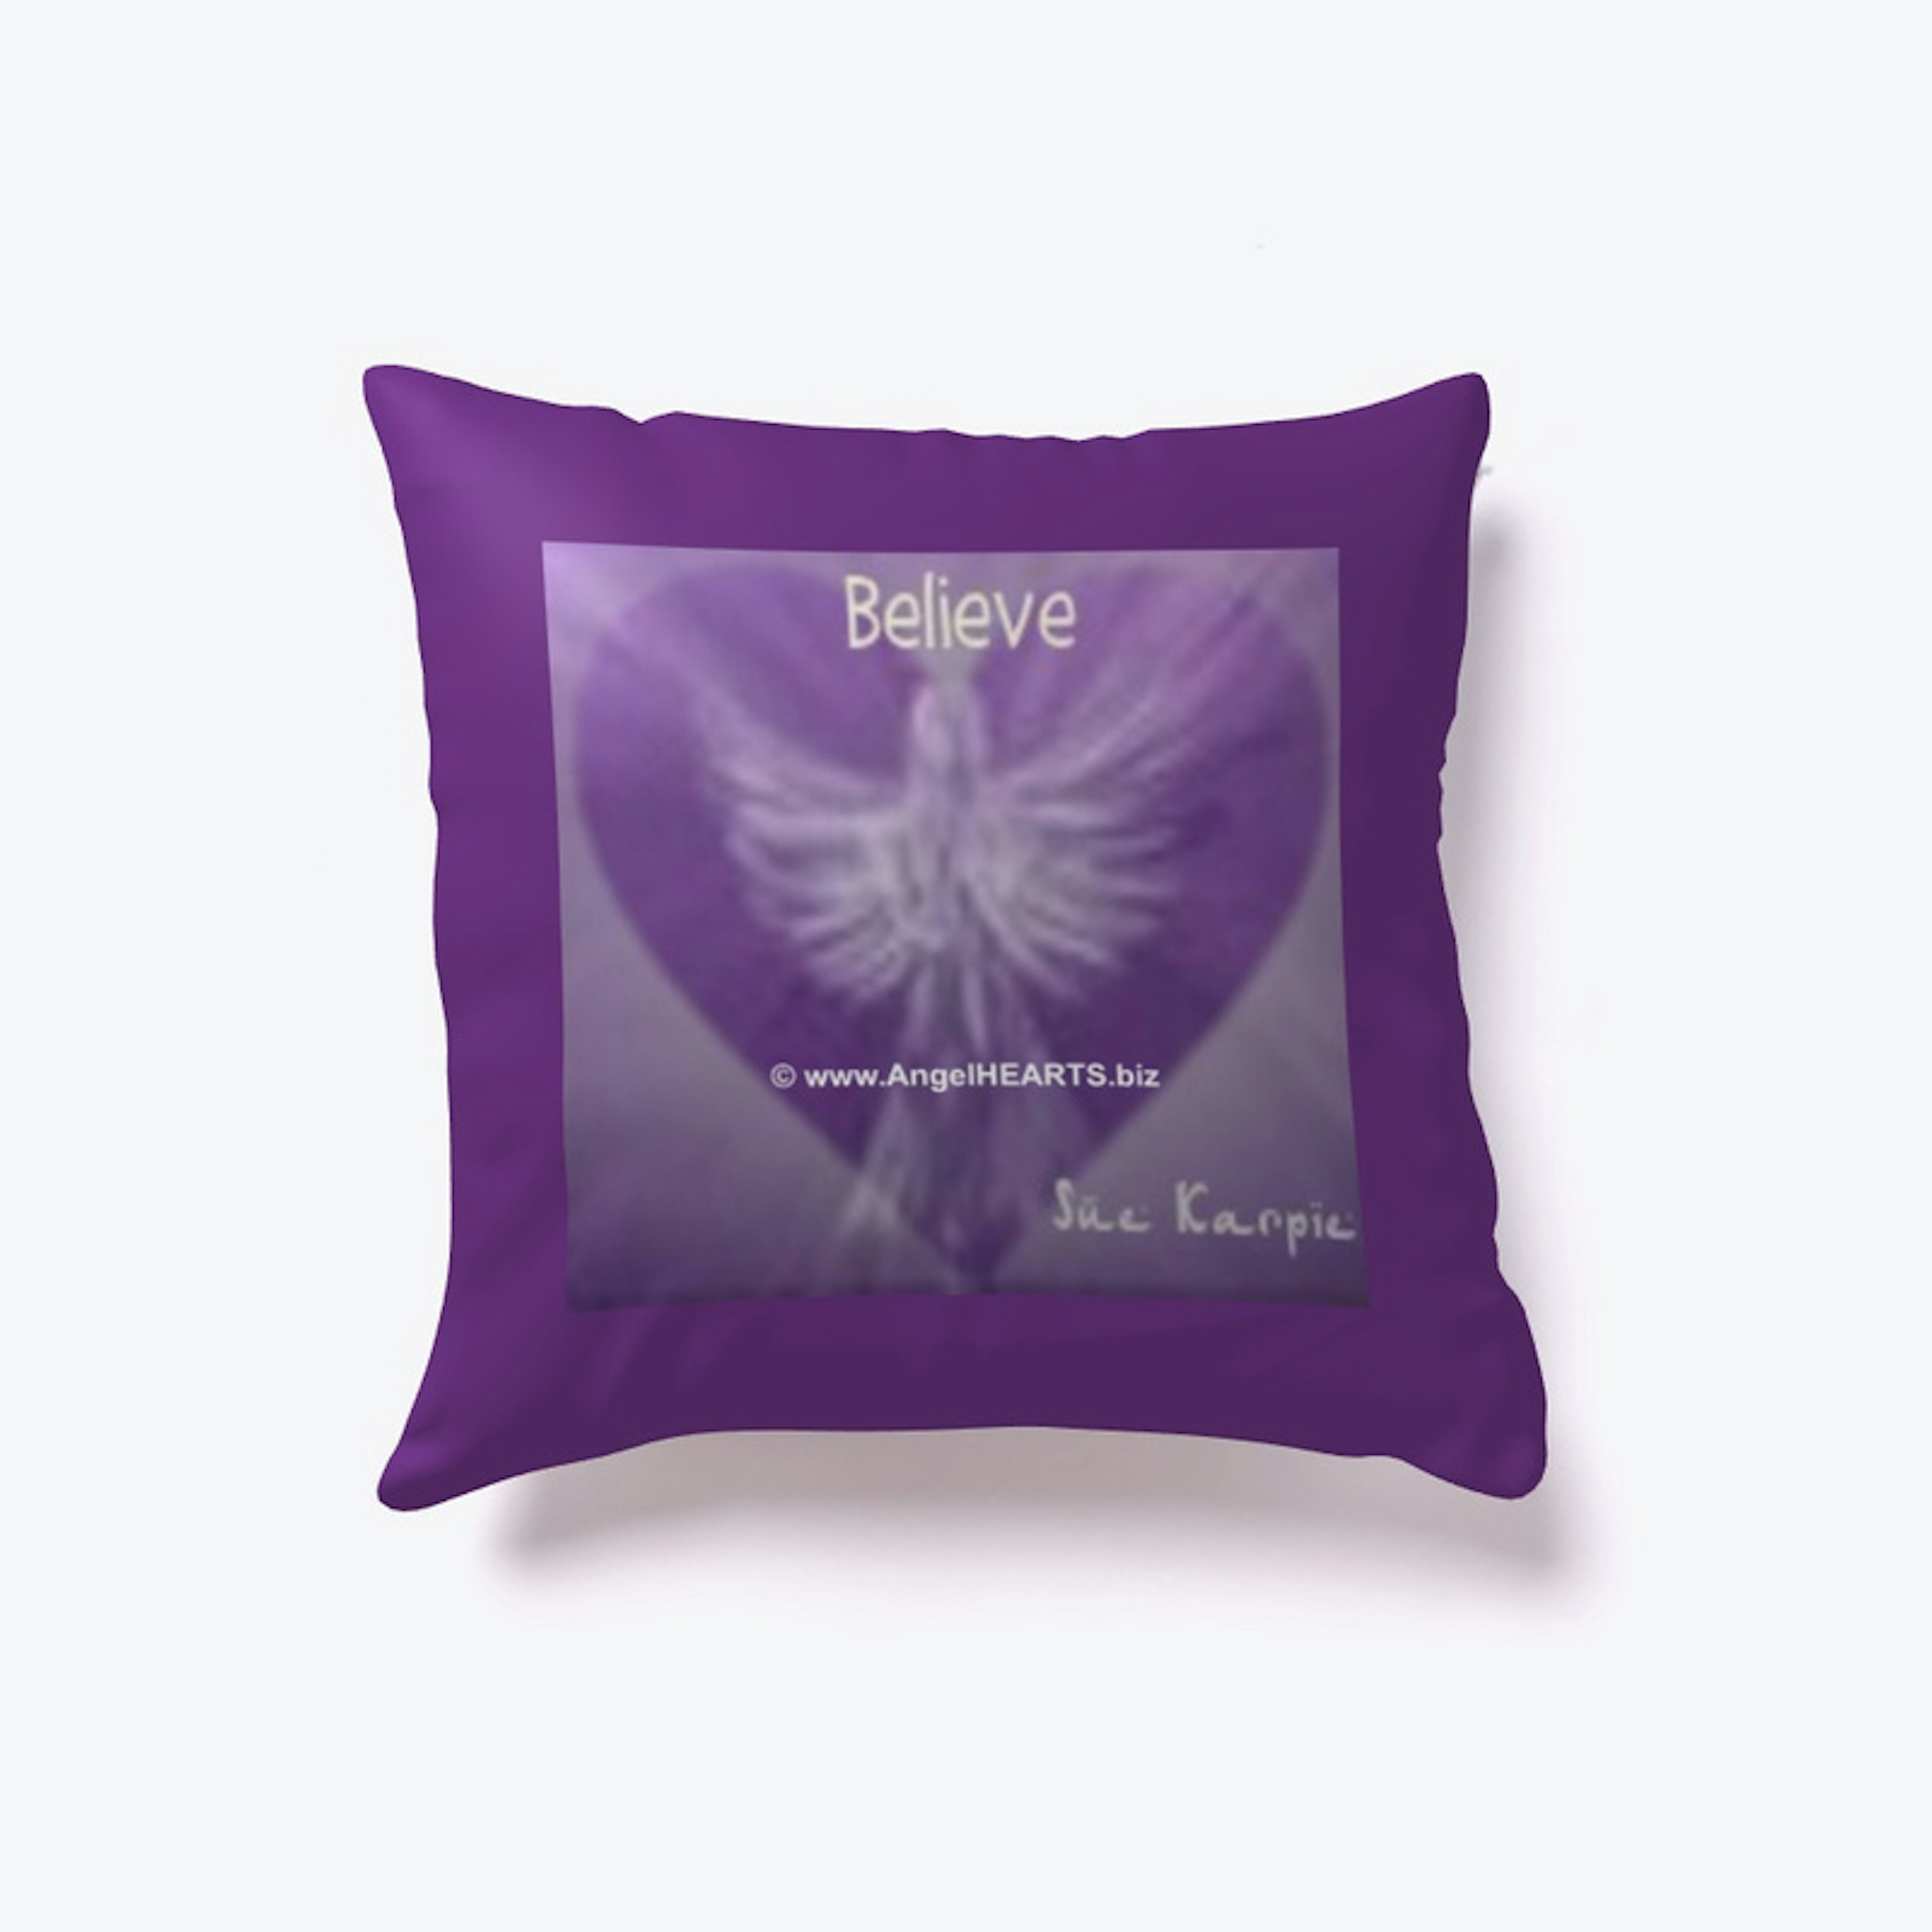 Believe Pillow..